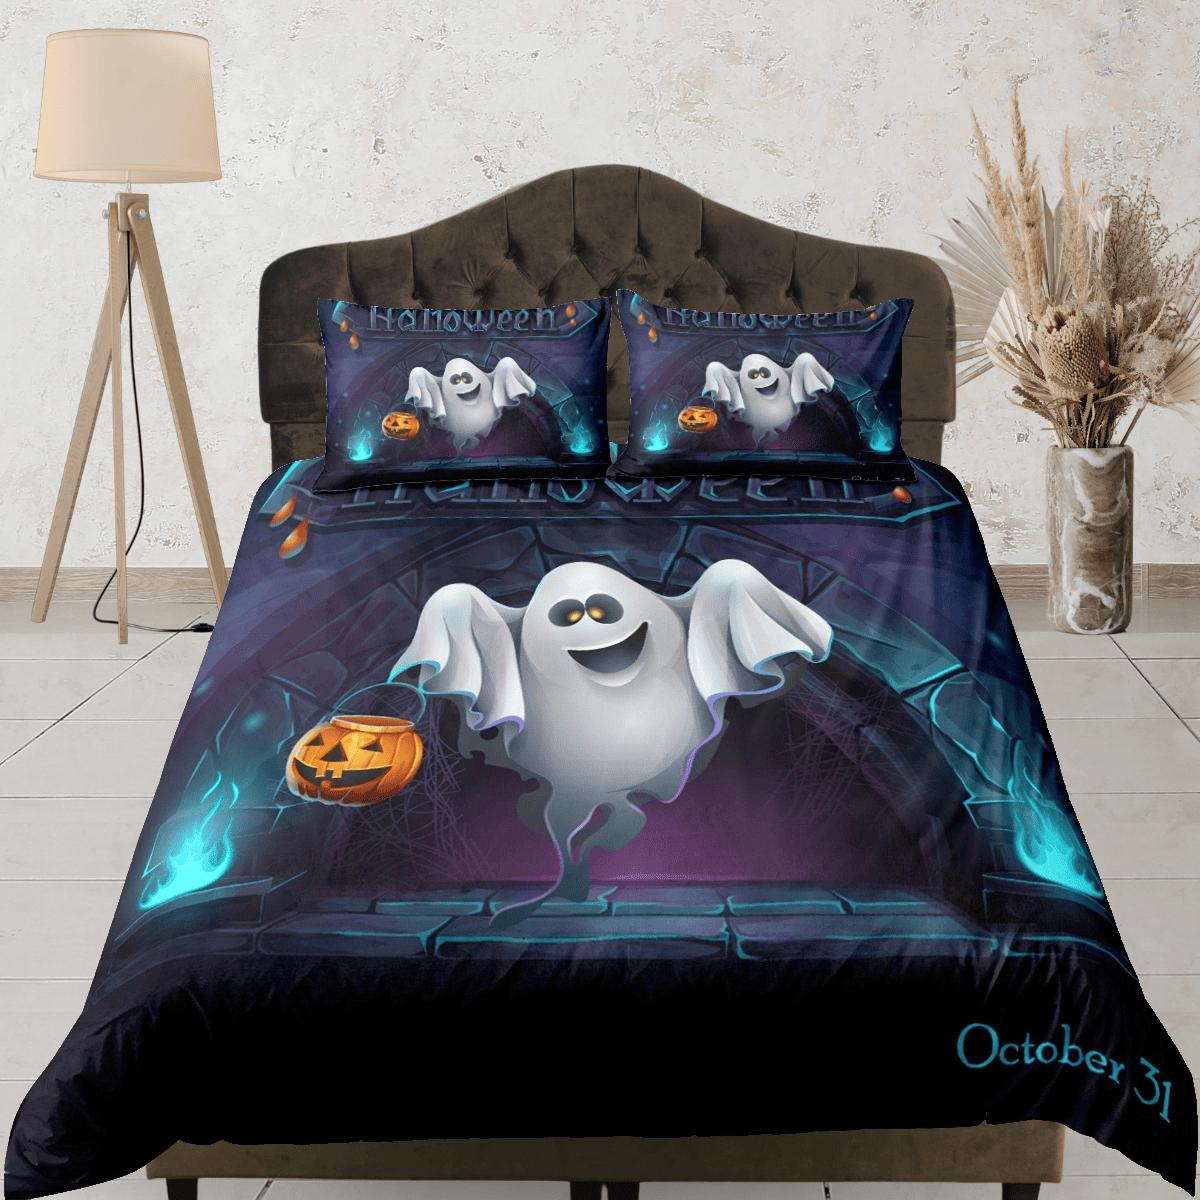 daintyduvet Ghost and pumpkin halloween bedding & pillowcase, gothic duvet cover, dorm bedding, goth decor toddler bedding, halloween gift